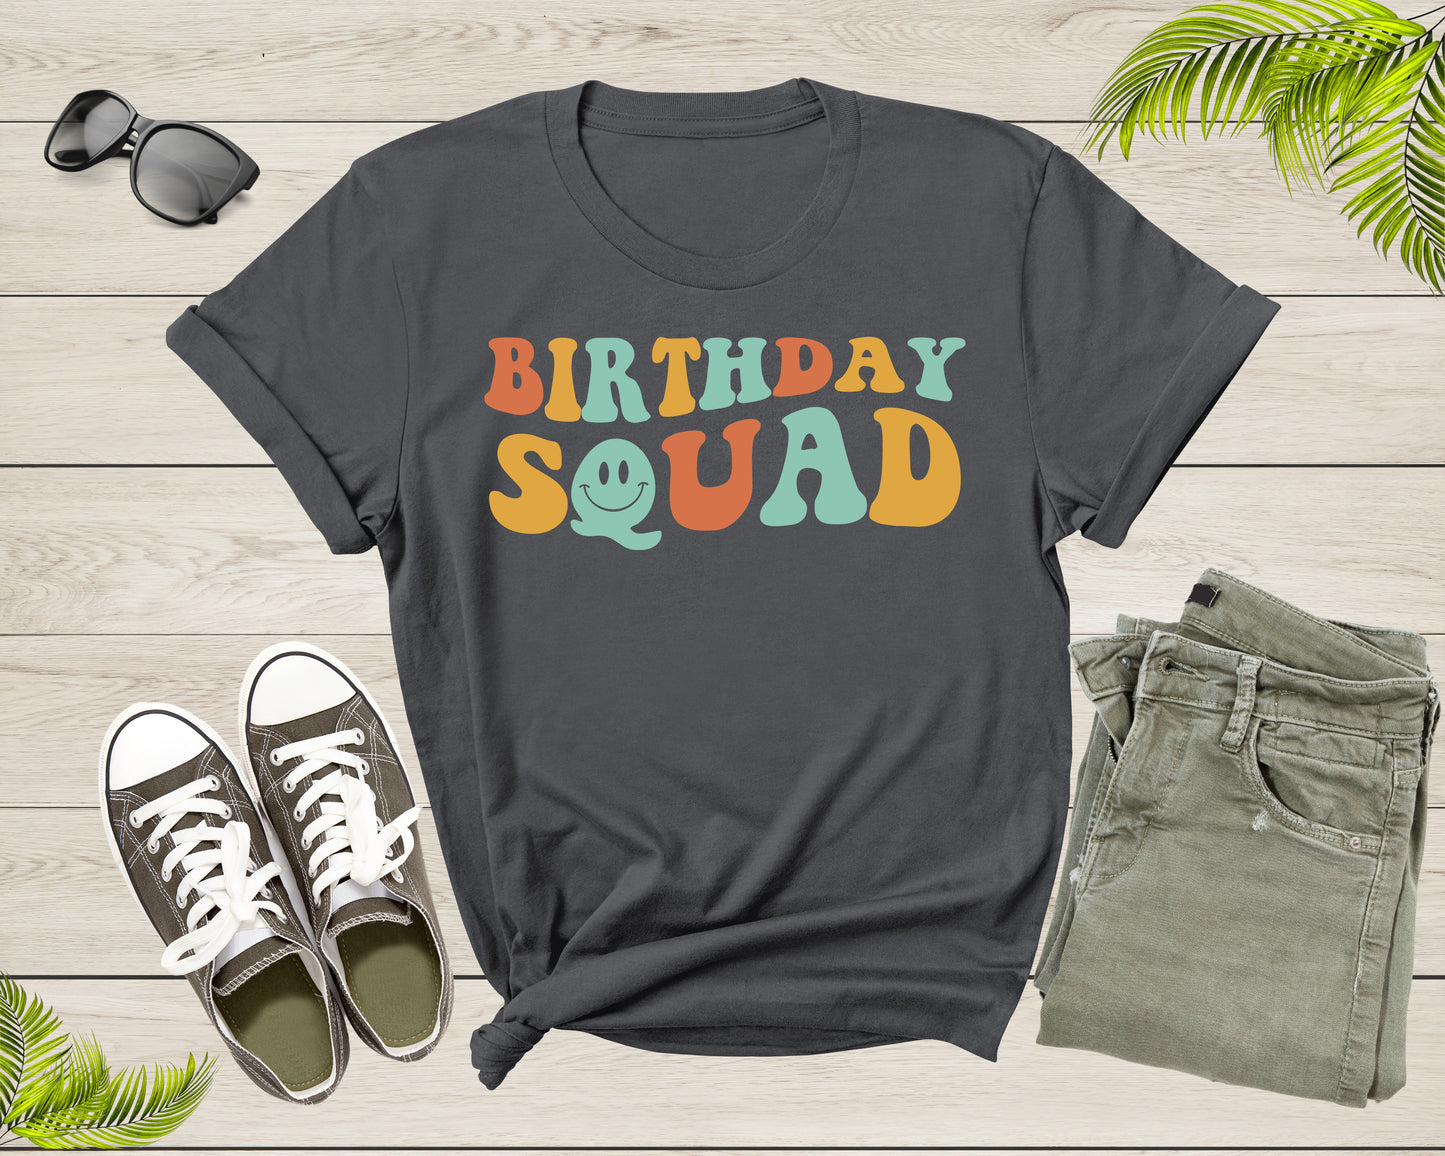 It Is My Birthday Crew Squad Gift Boy Girl Sister Brother T-Shirt Birthday Present T Shirt for Men Women Kids Boys Girls Graphic Tshirt